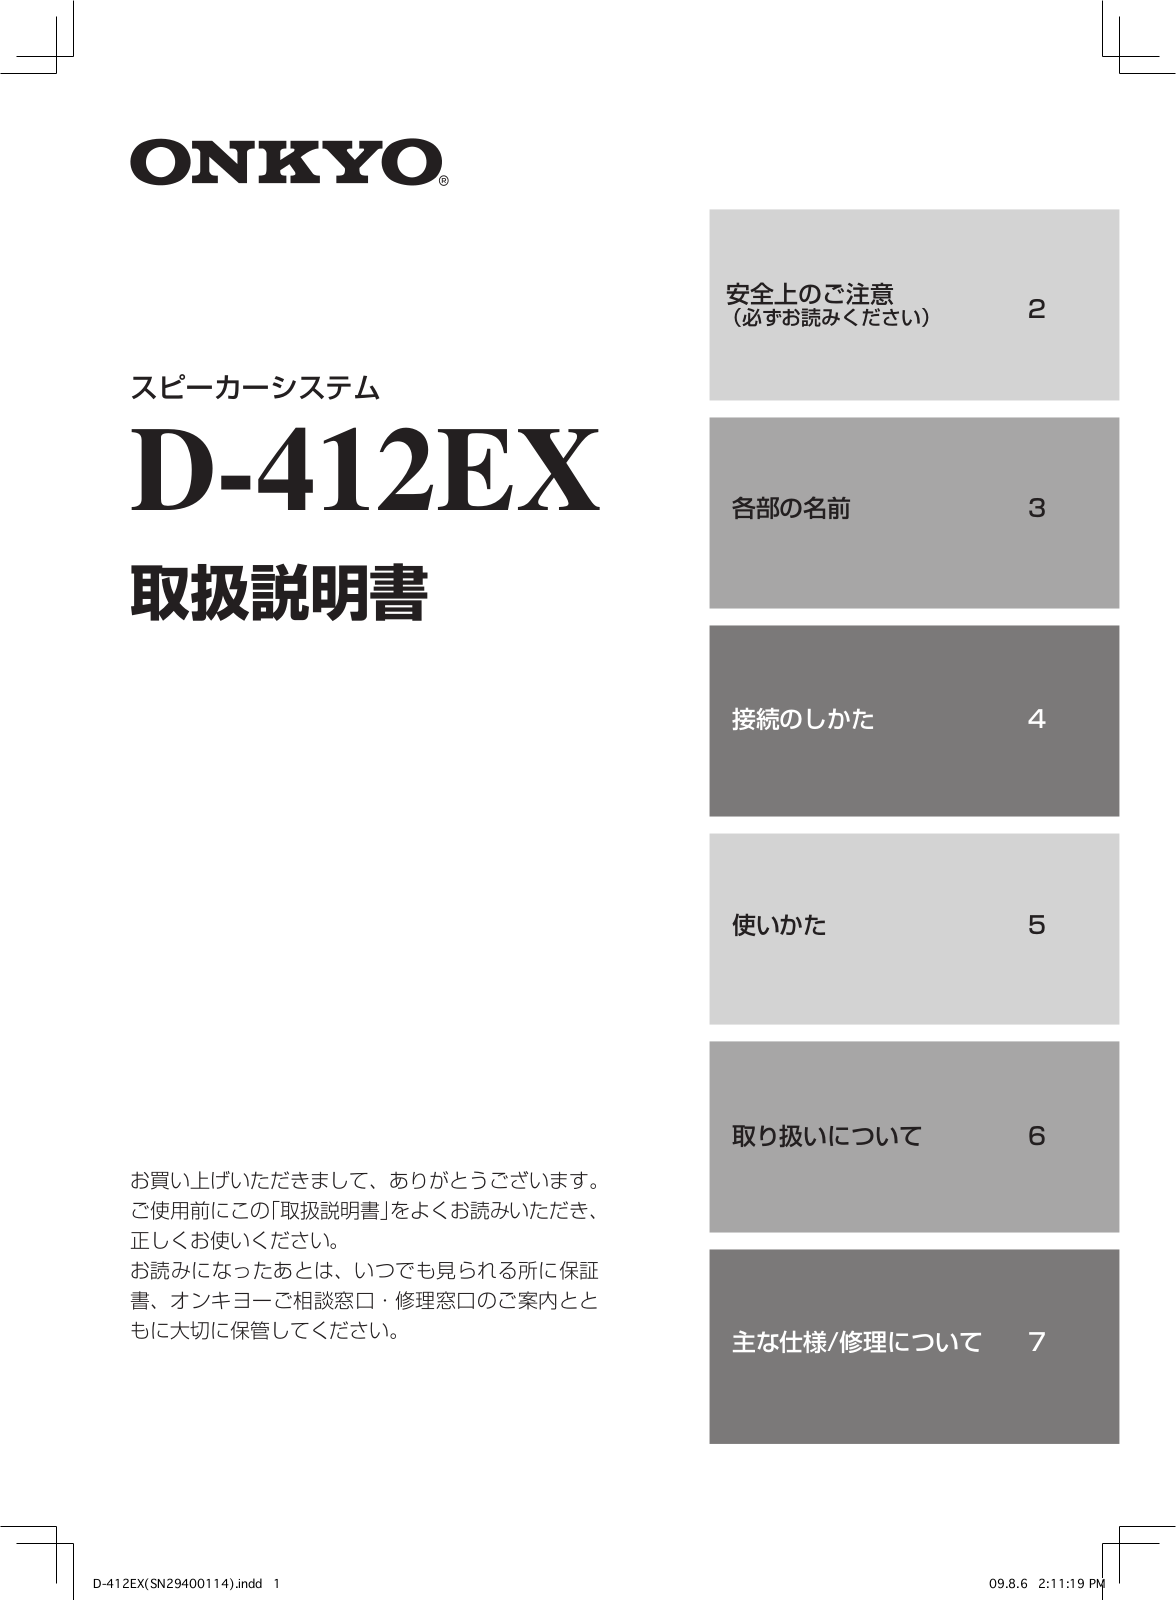 Onkyo d-412ex User Manual